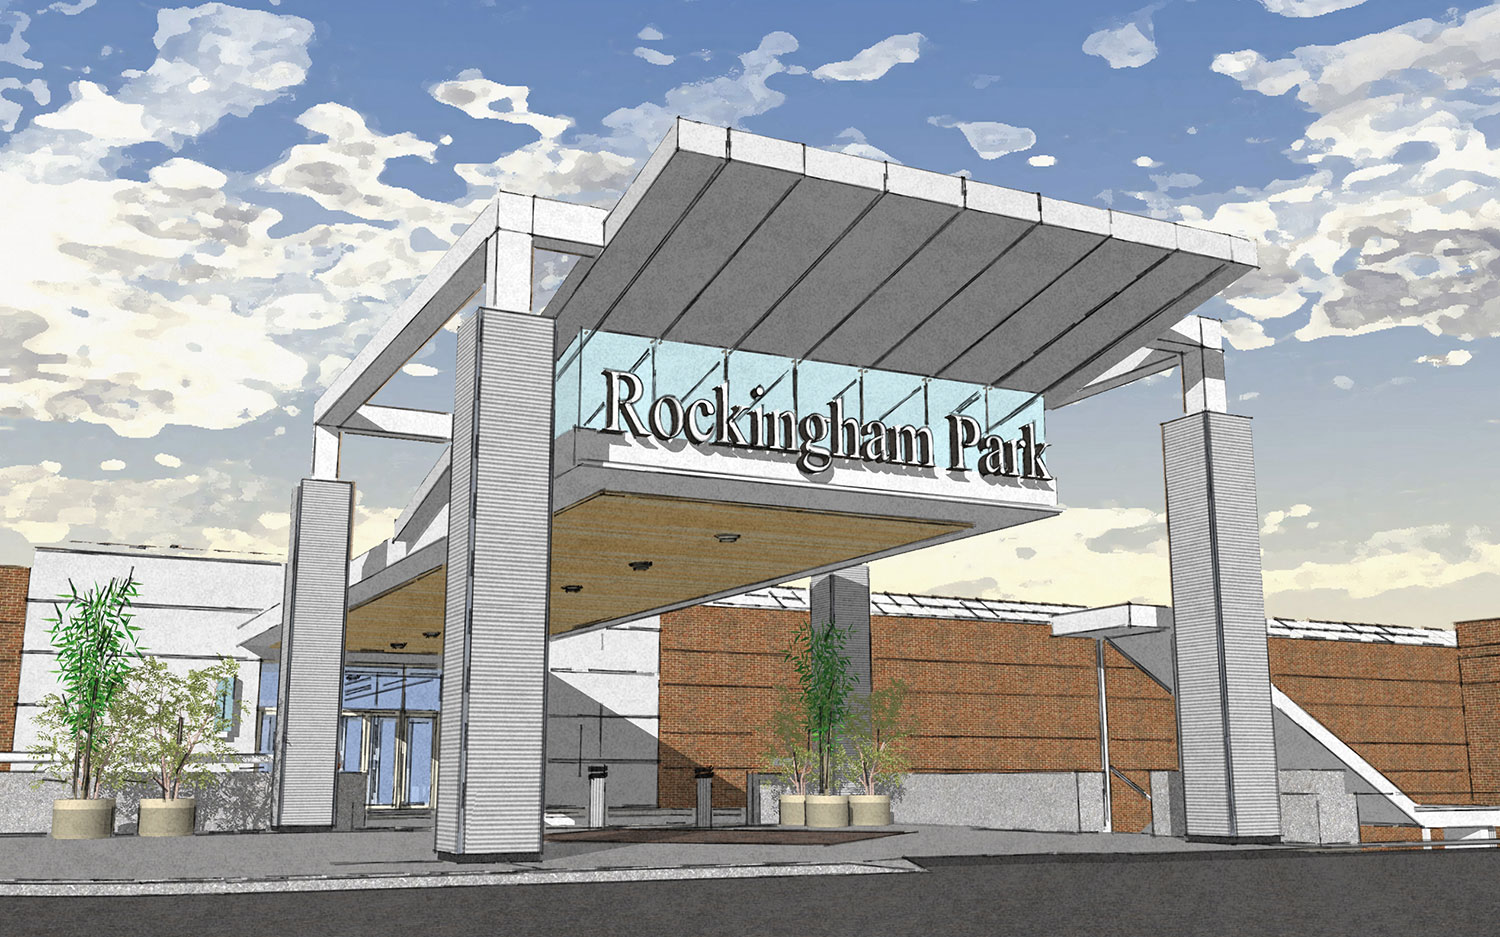 The Mall at Rockingham Park Renovation